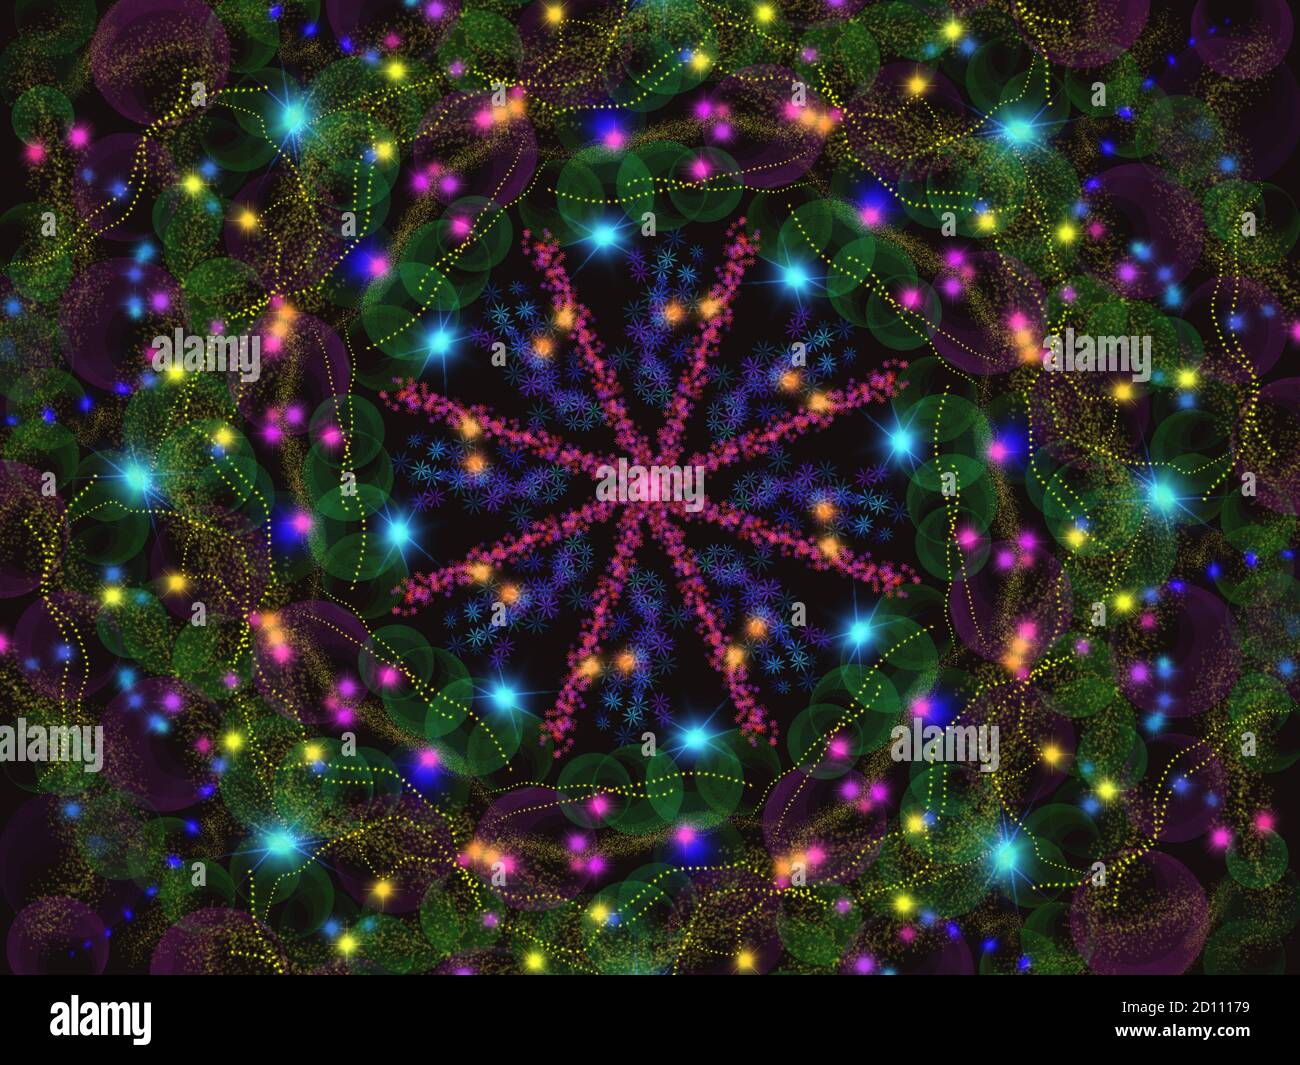 Nebula pattern digital art with eight spoke star design at center Stock Photo